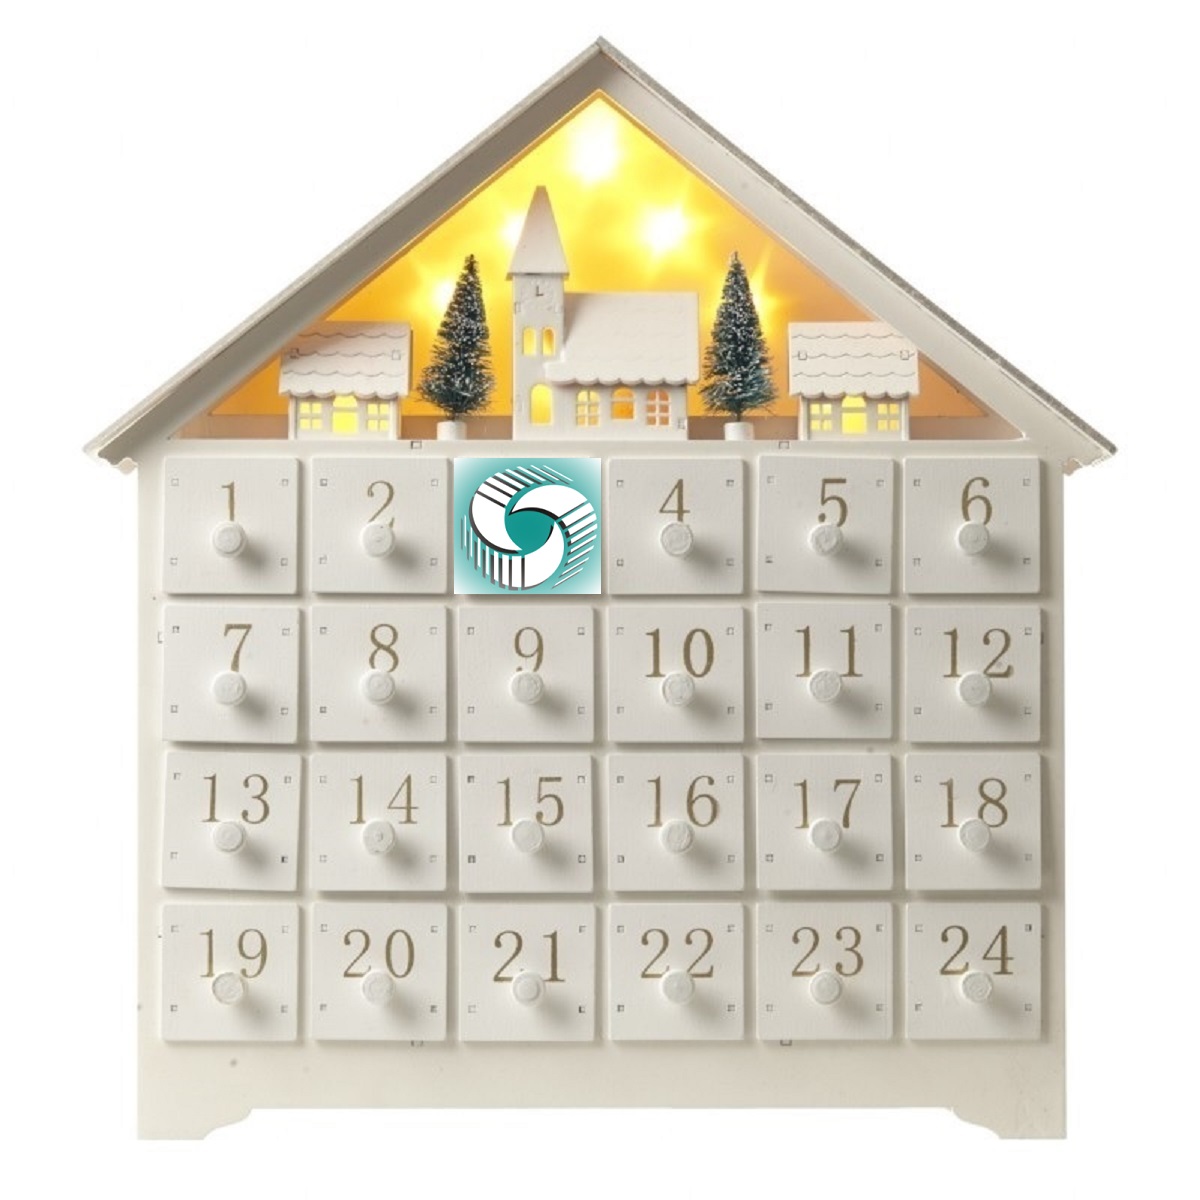 Day 3 – Frontier’s Advent Calendar